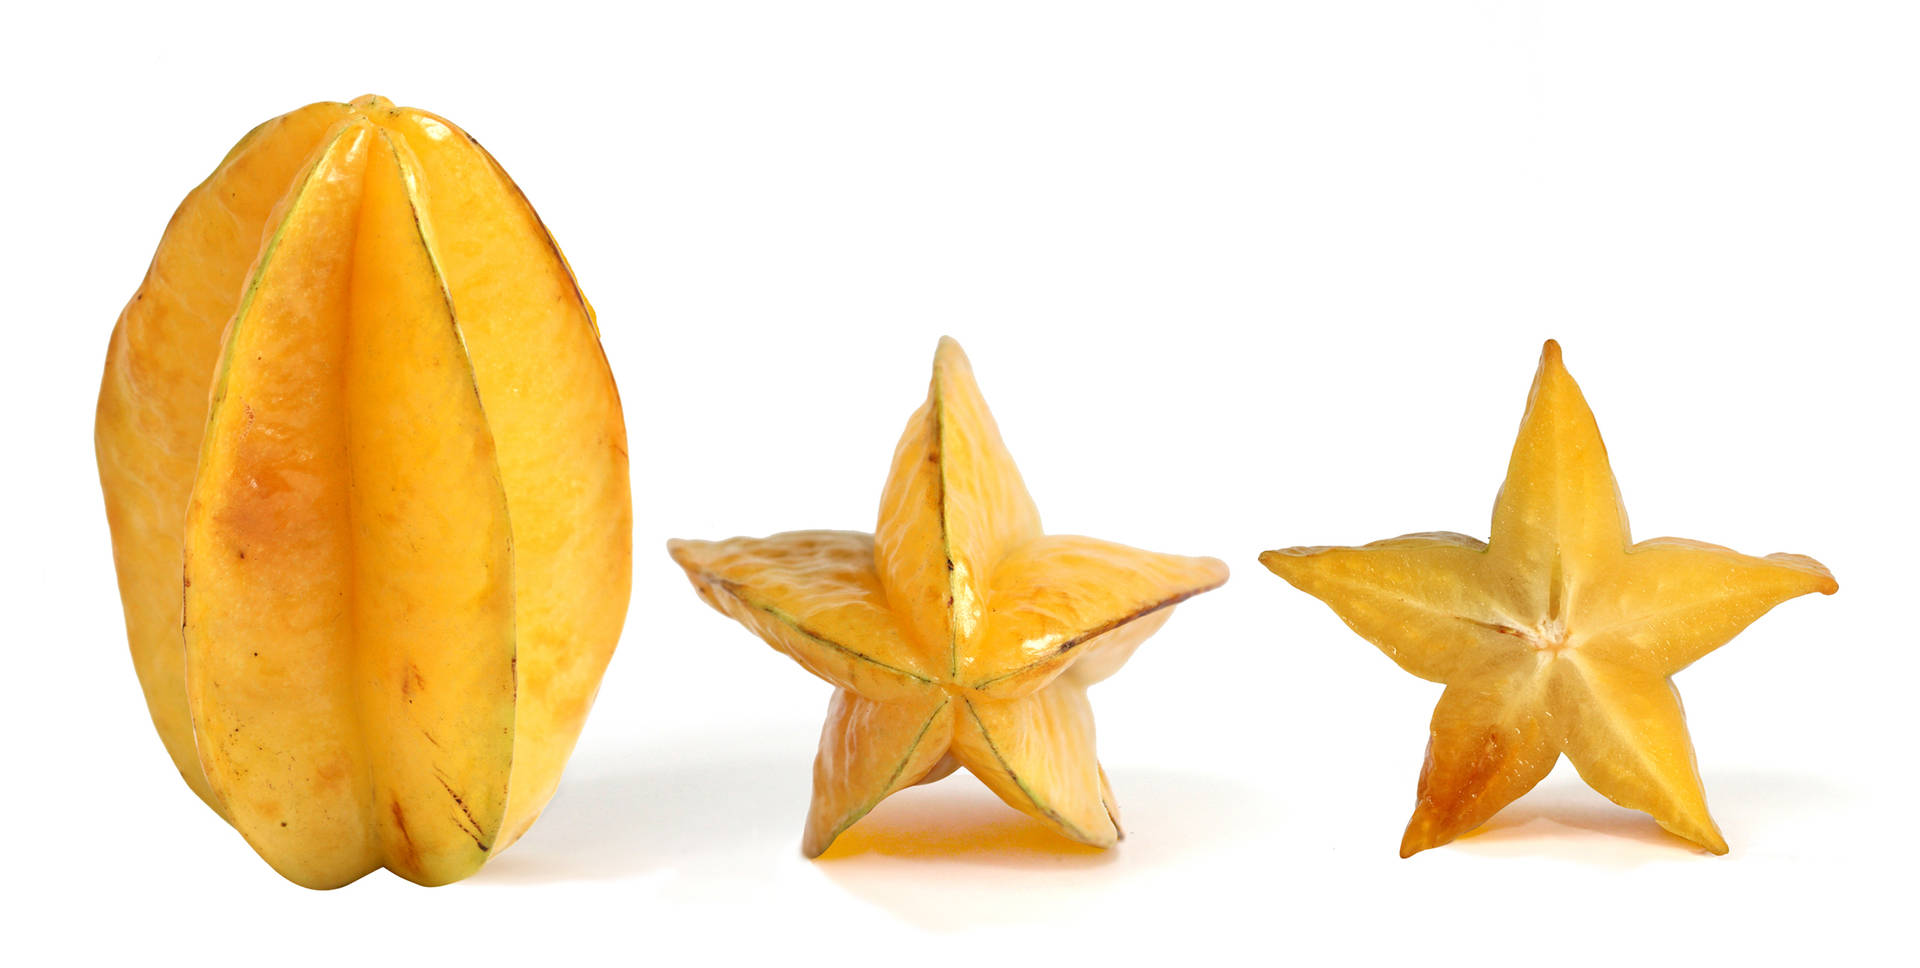 Yellow Star Fruit Slices Wallpaper